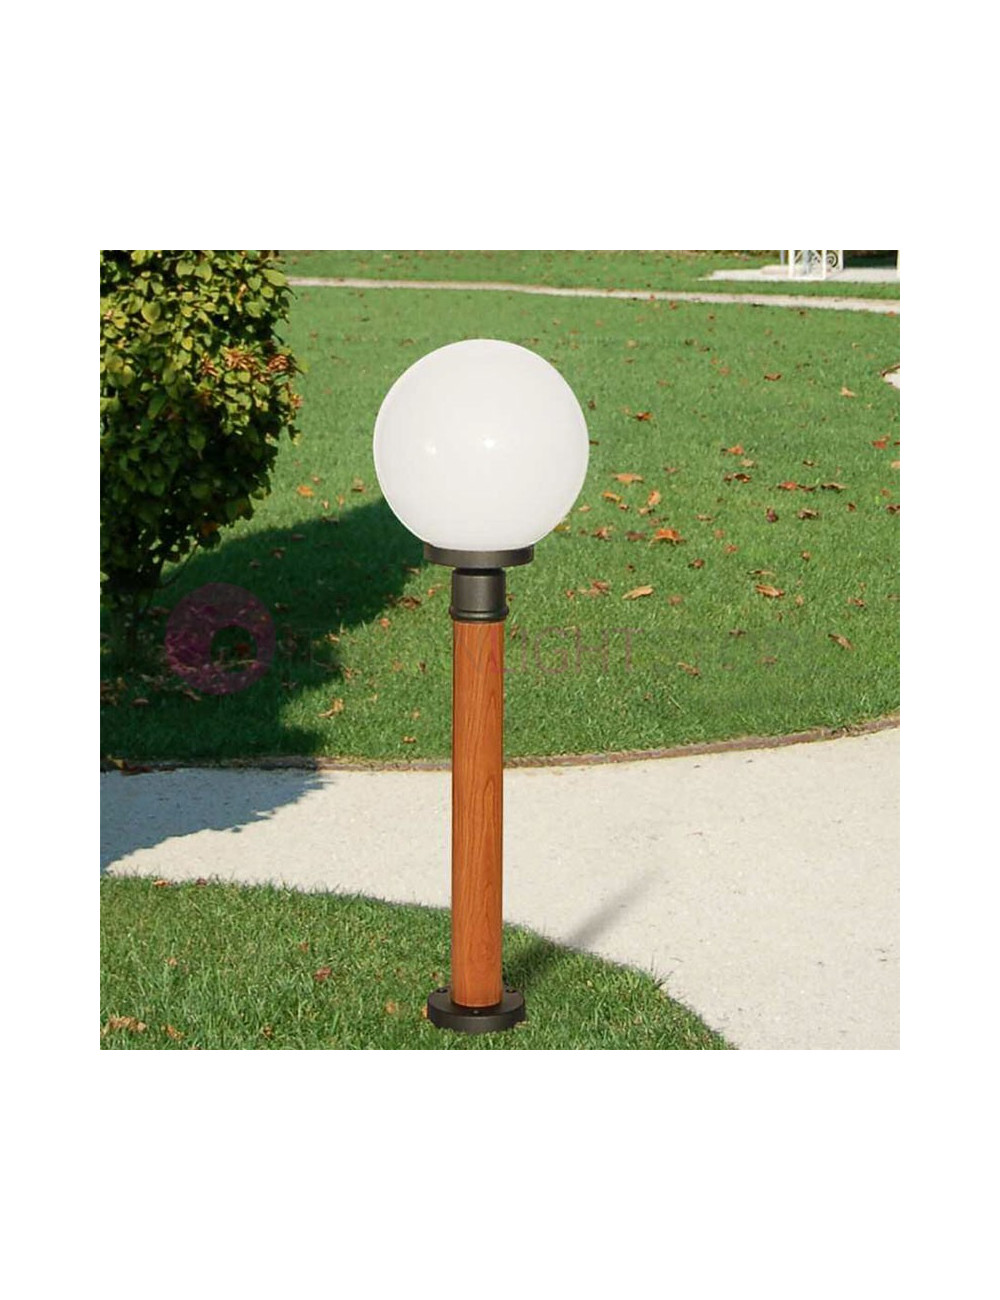 FOCUS Pole Wood Effect Lamp Outdoor Garden Sfera Globo d.25